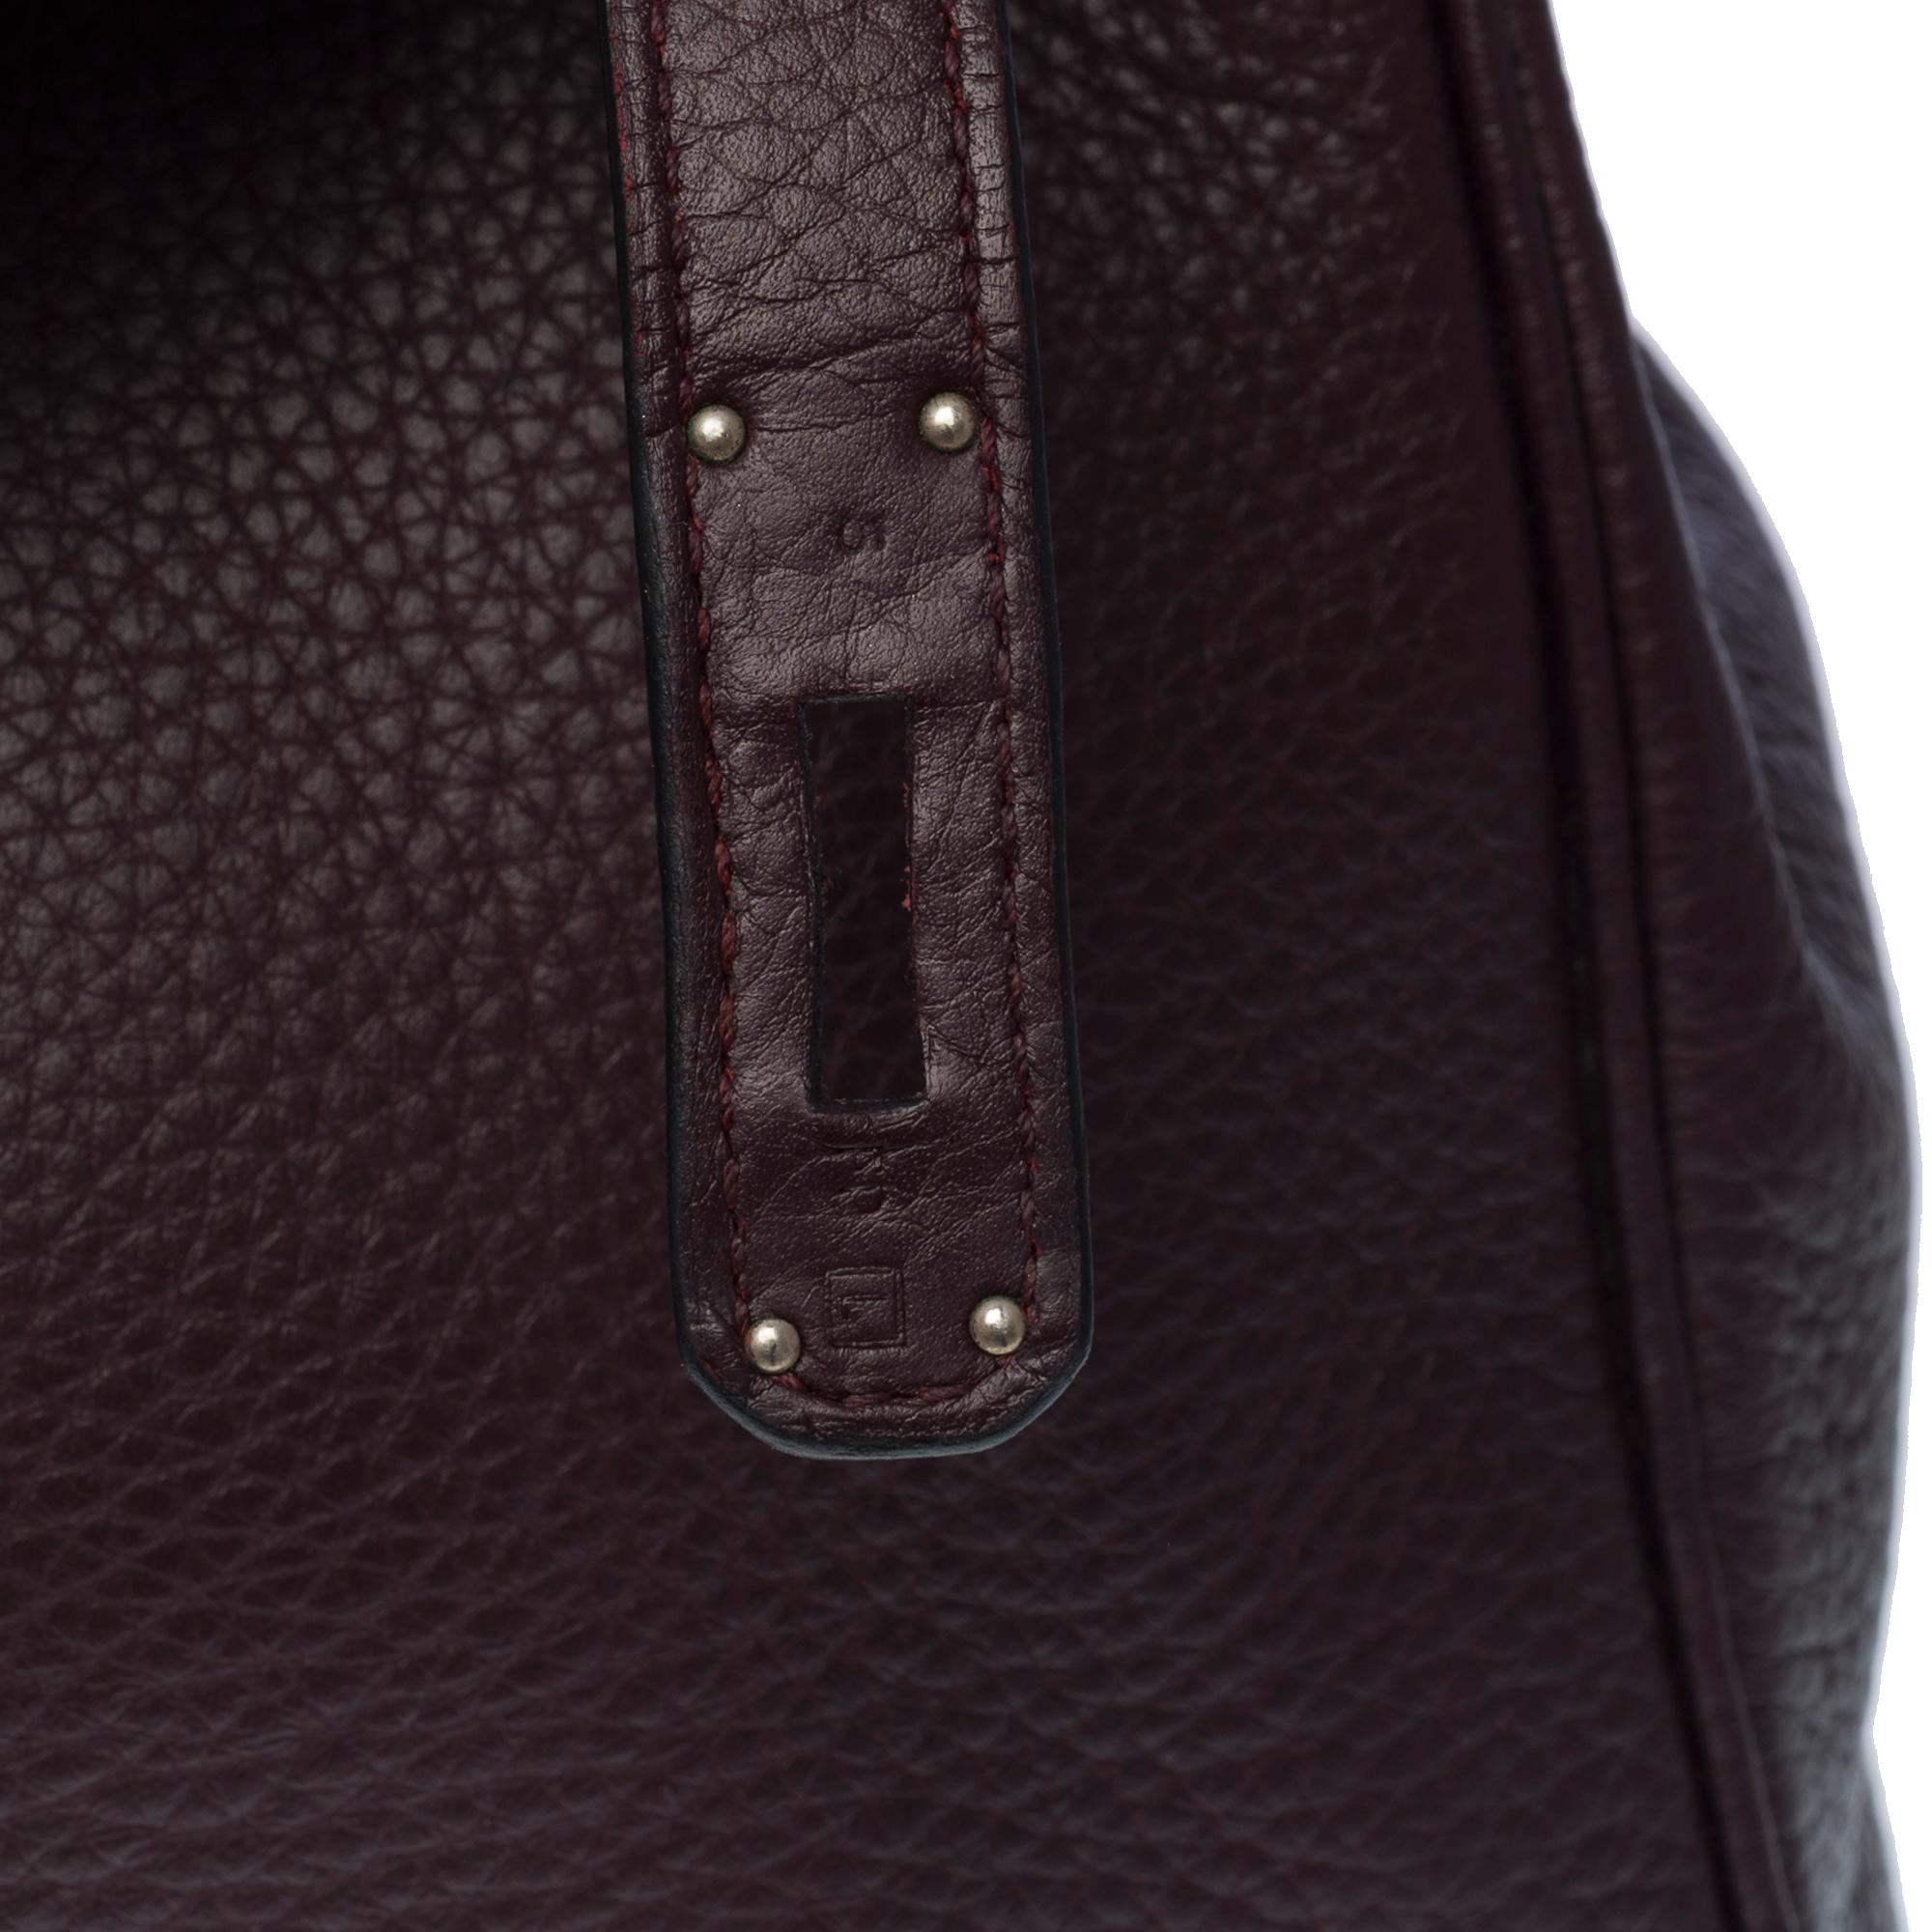 Amazing Hermès Birkin 35 handbag in Togo Raisin leather, SHW For Sale 3